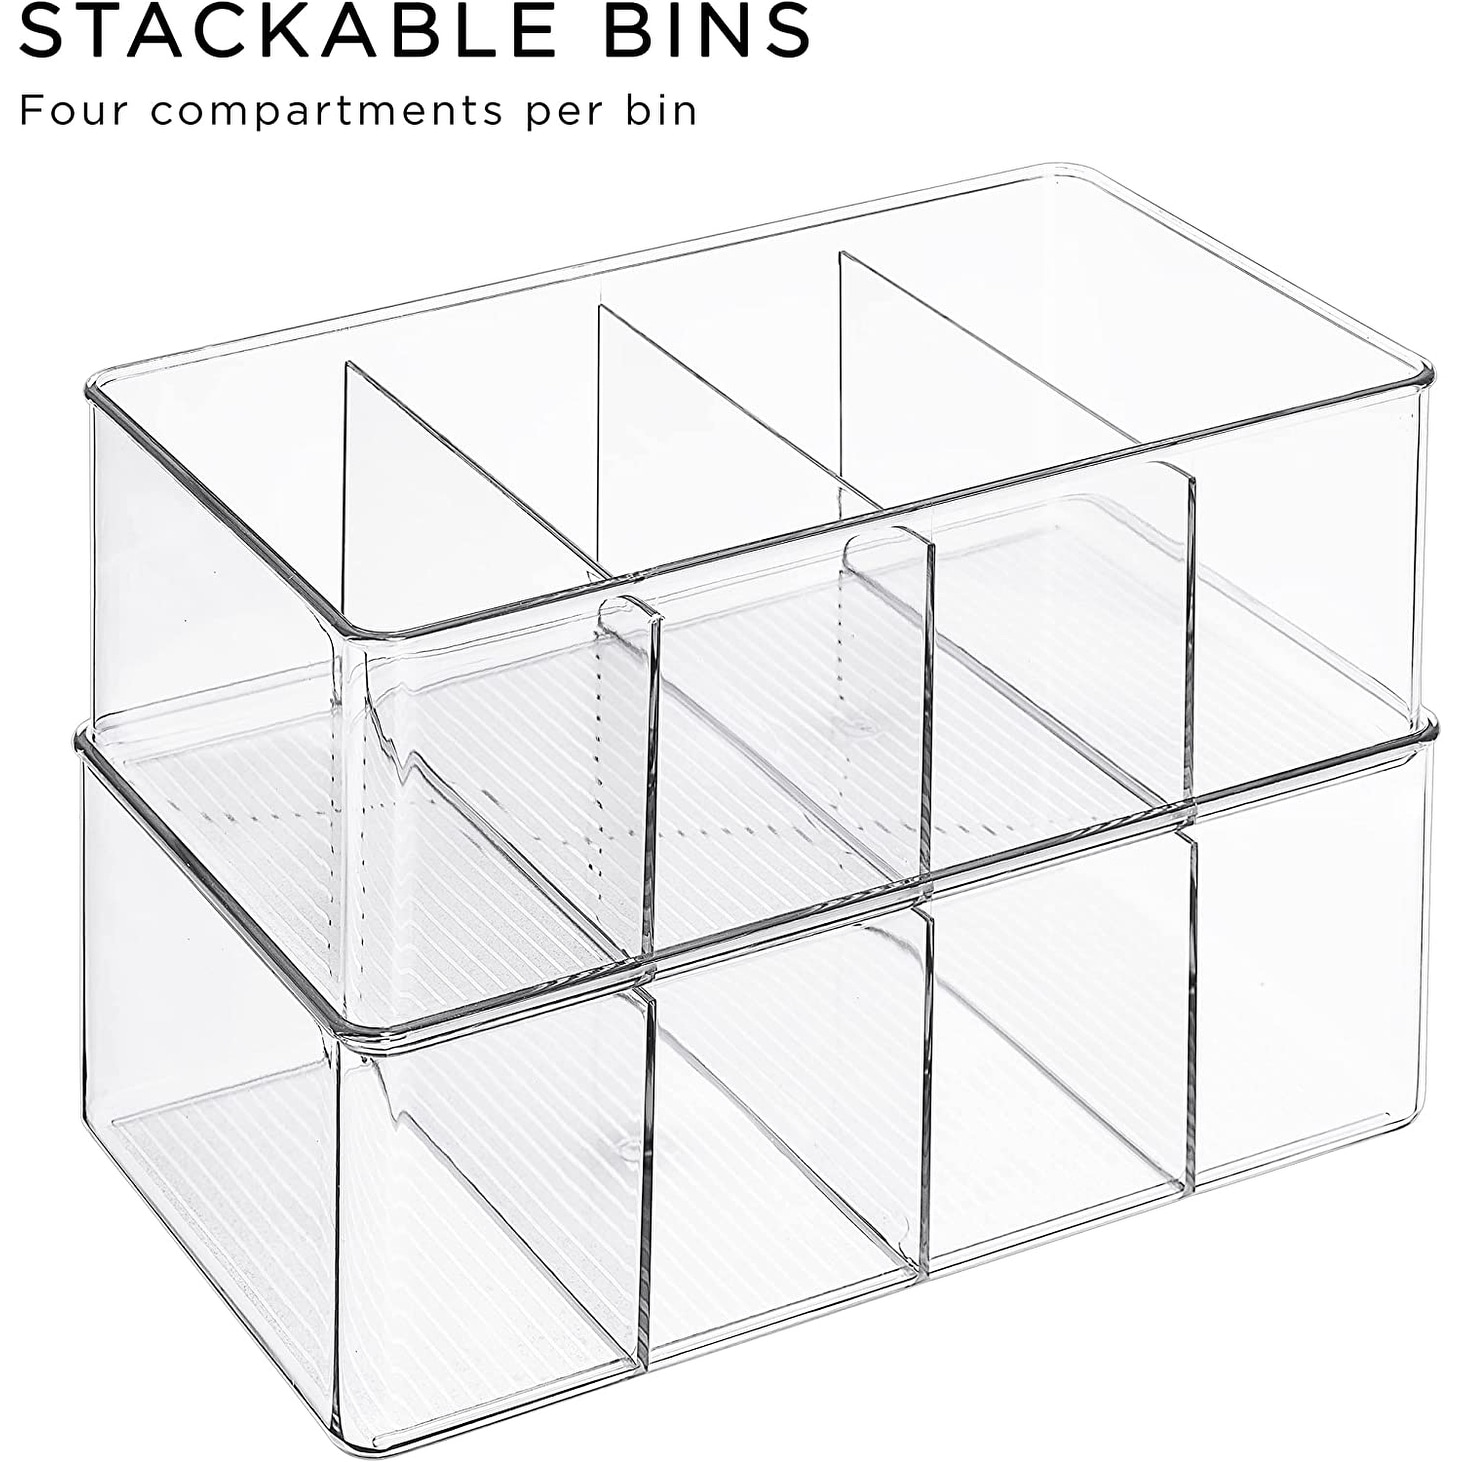 Sorbus Clear Storage Bins with Lid 4 Pack